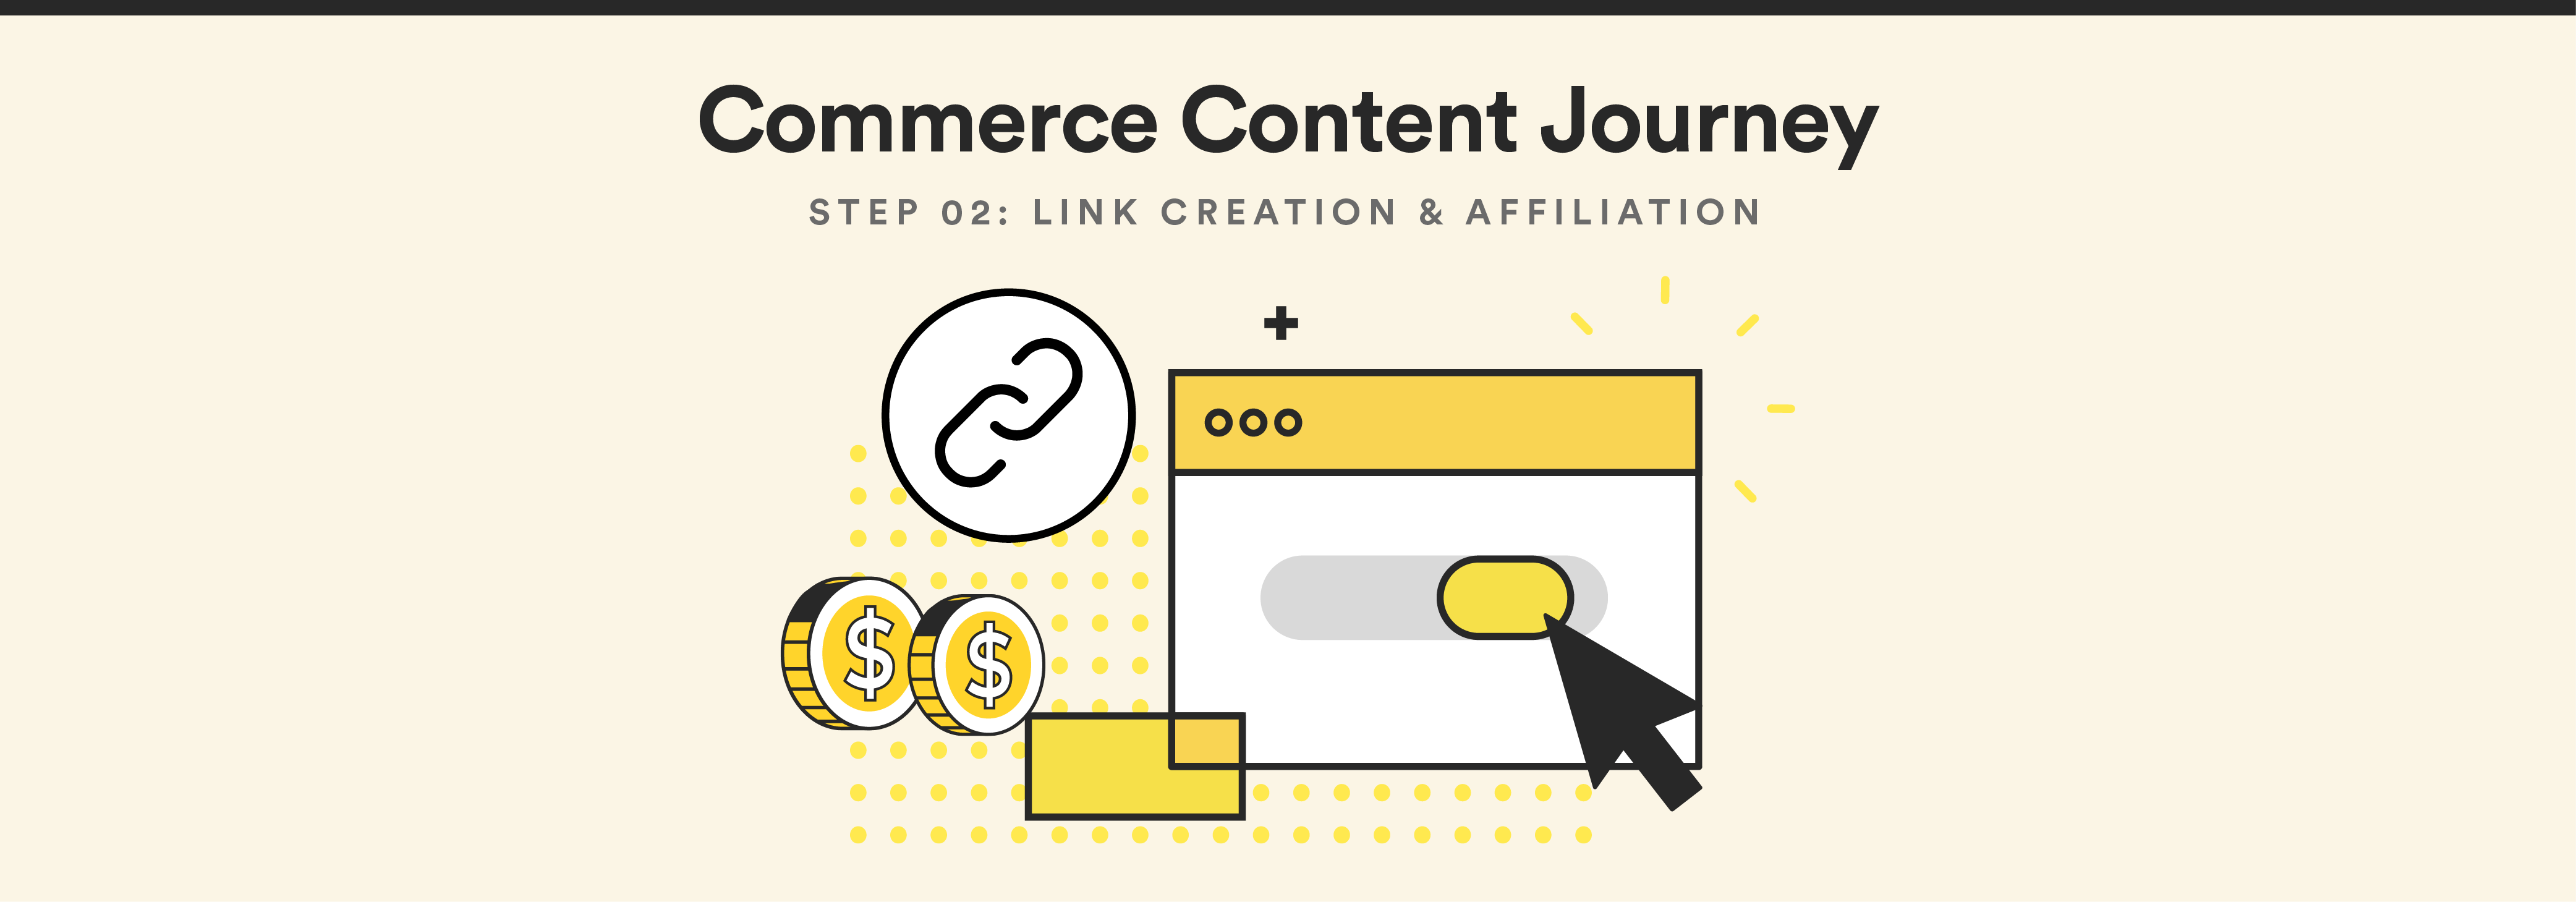 Commerce Content Journey: Link Creation & Affiliation